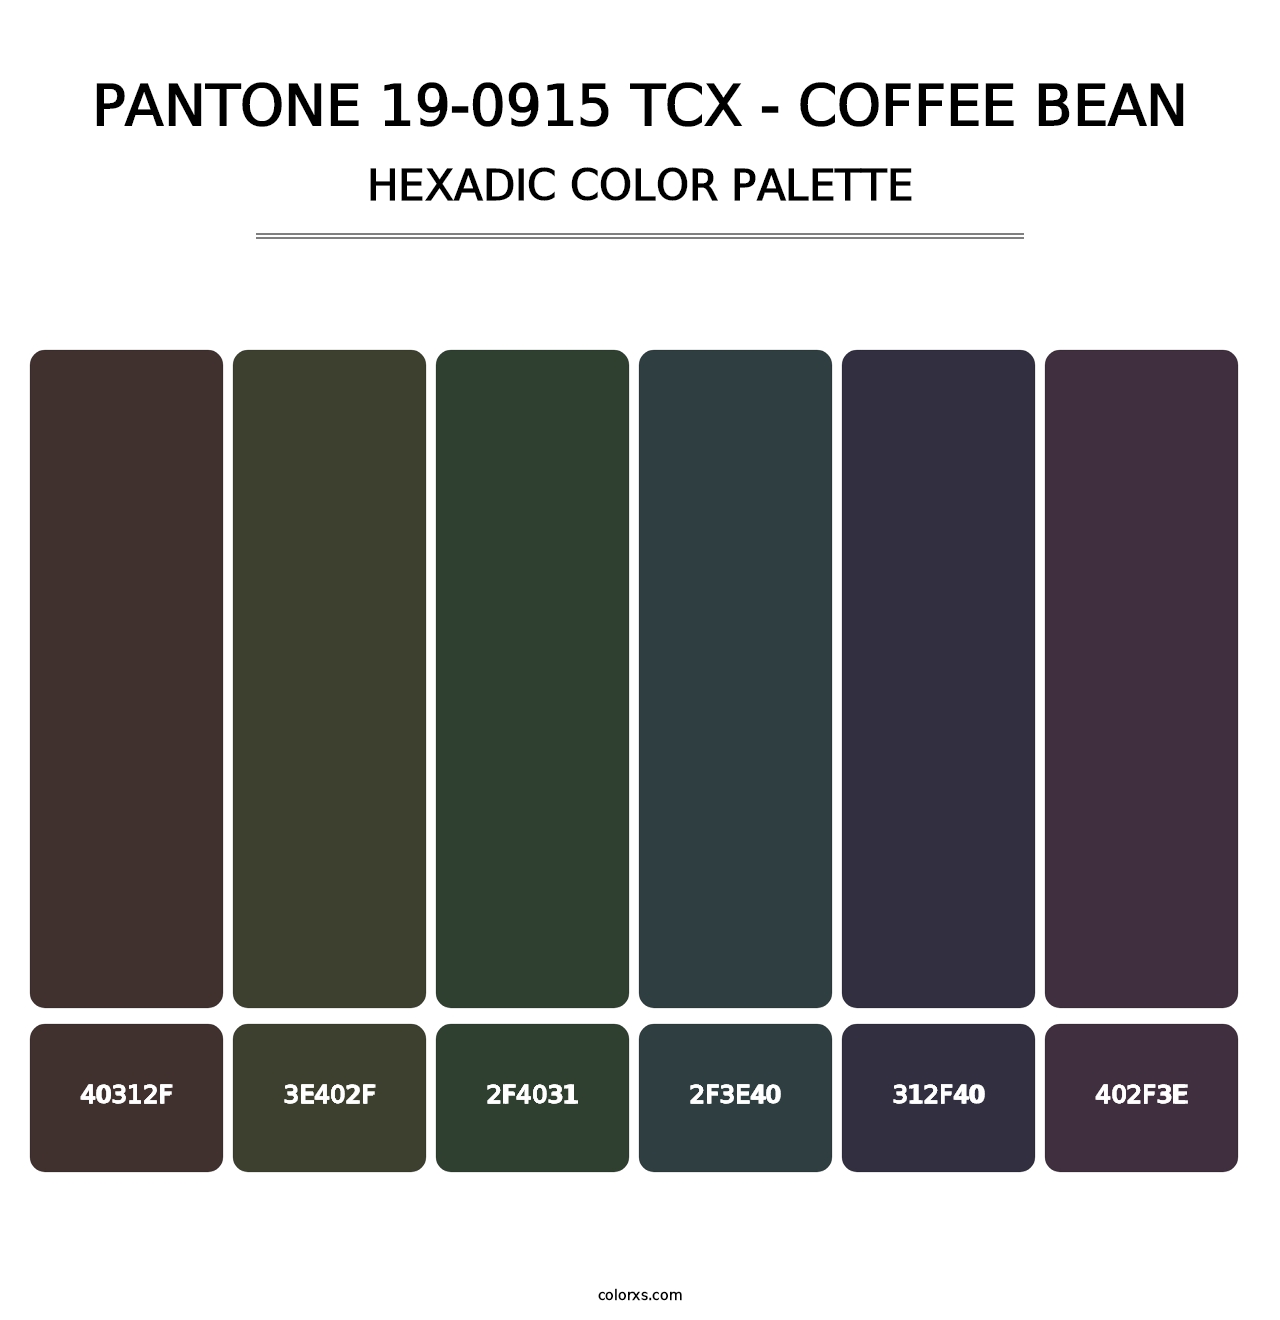 PANTONE 19-0915 TCX - Coffee Bean - Hexadic Color Palette